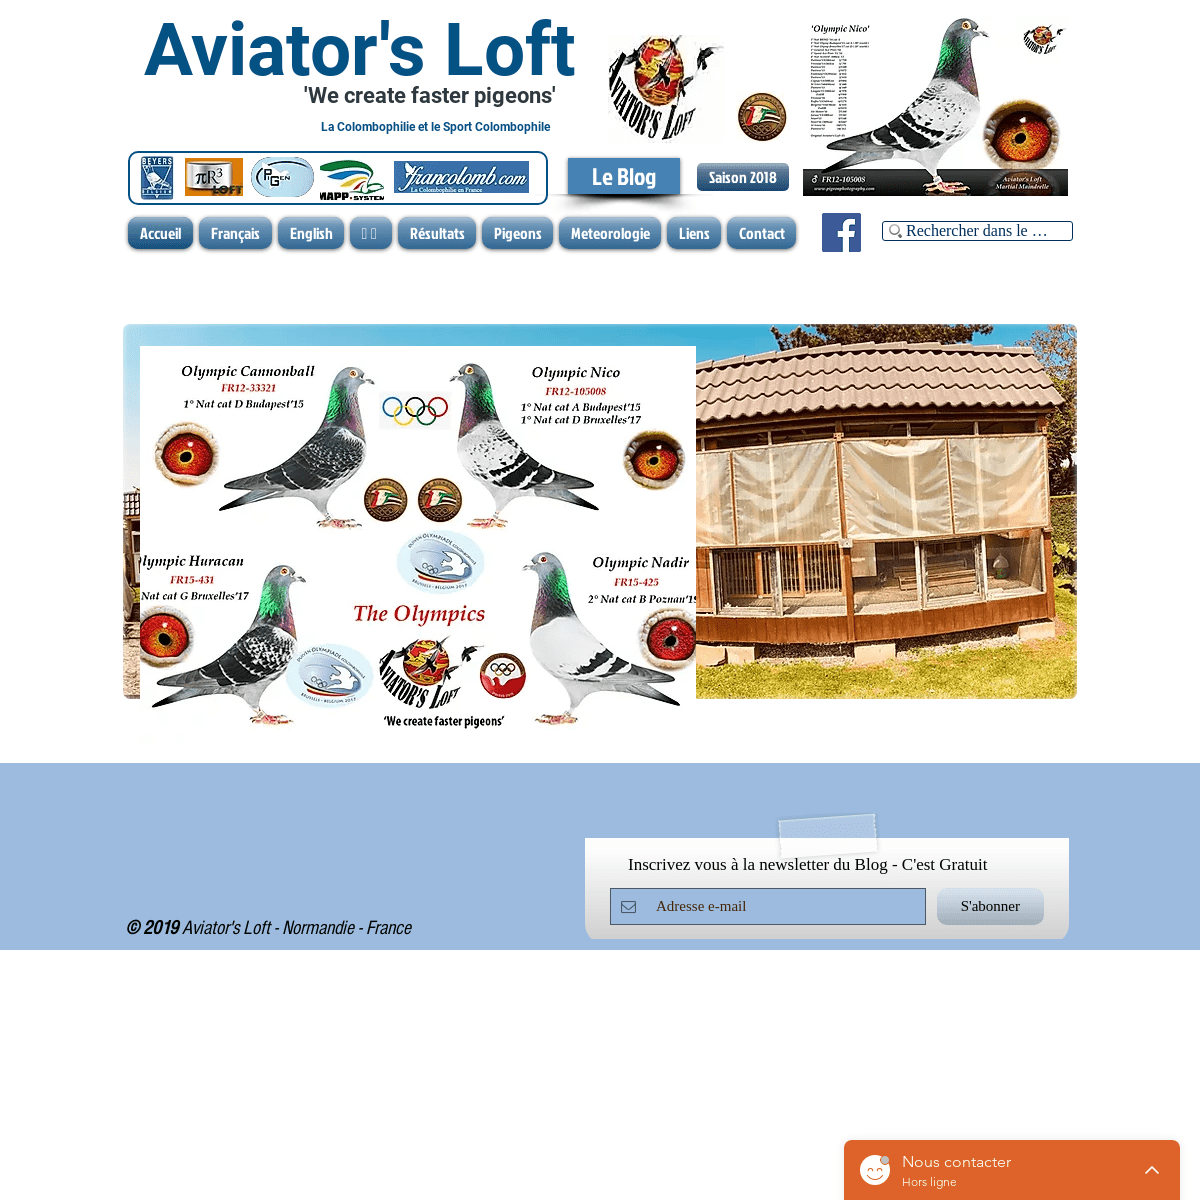 A complete backup of aviators-loft.com